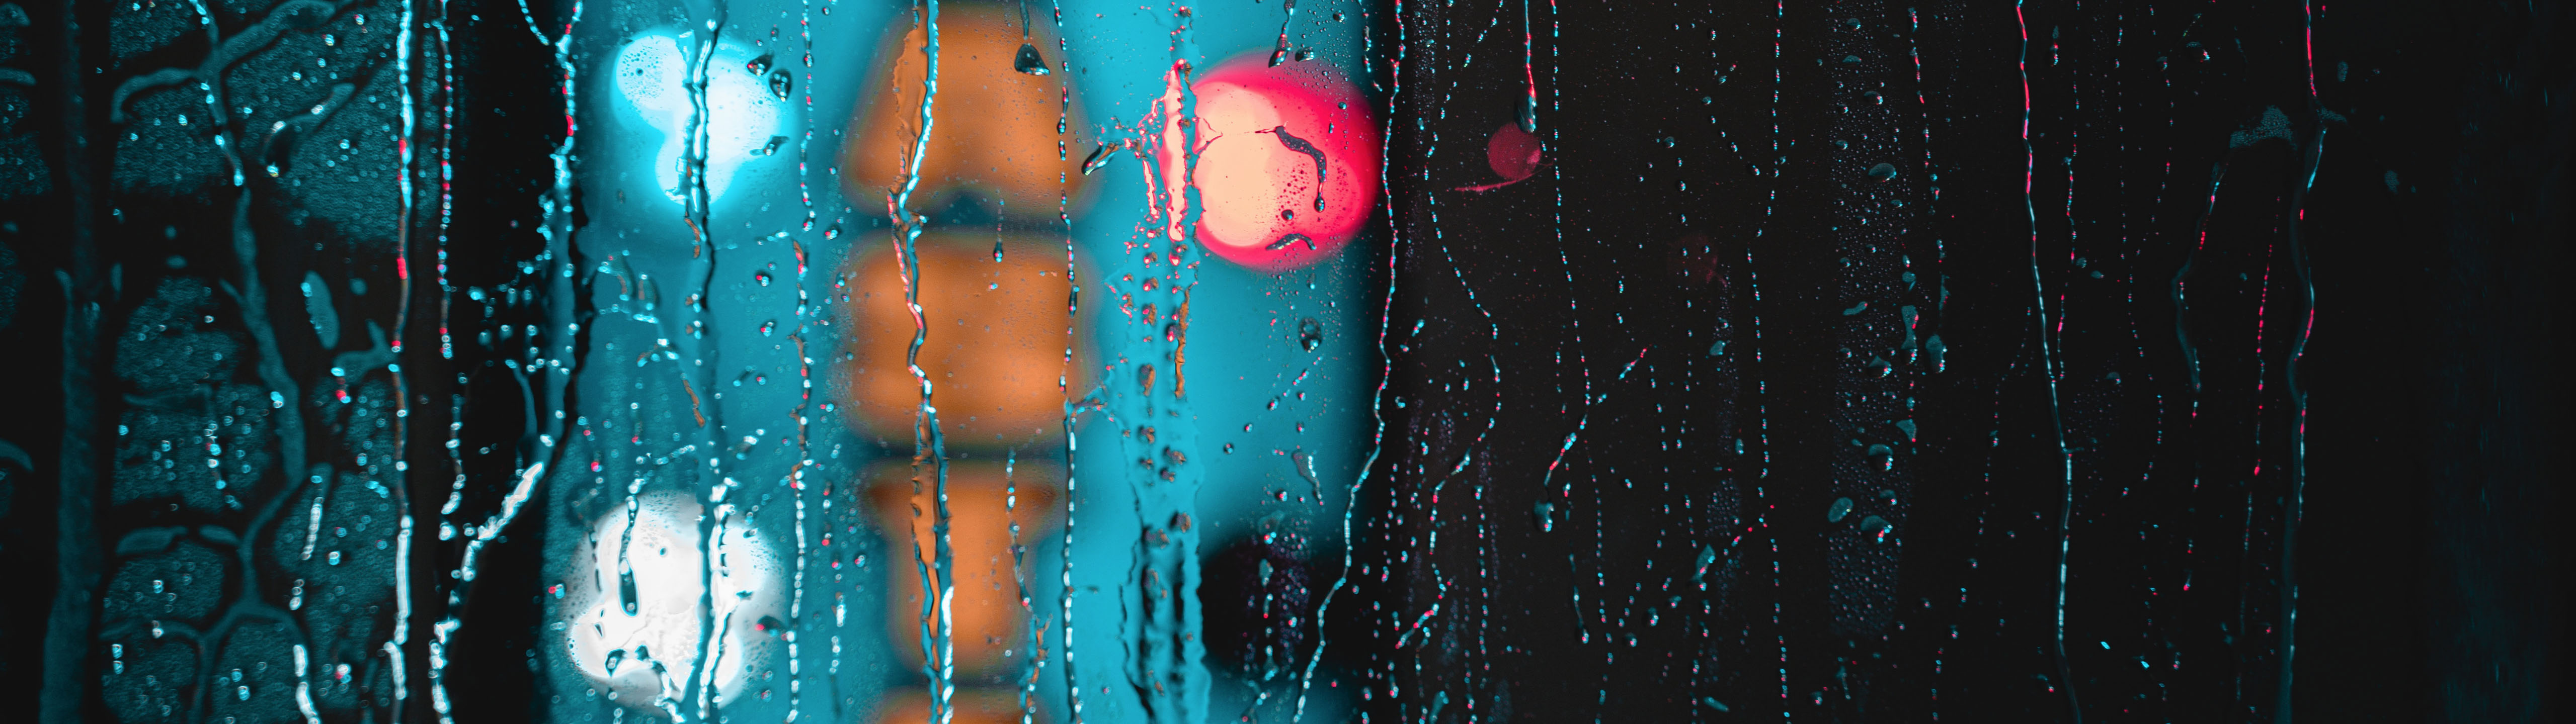 Wallpaper, raindrop, water drops, blurred 5120x1440